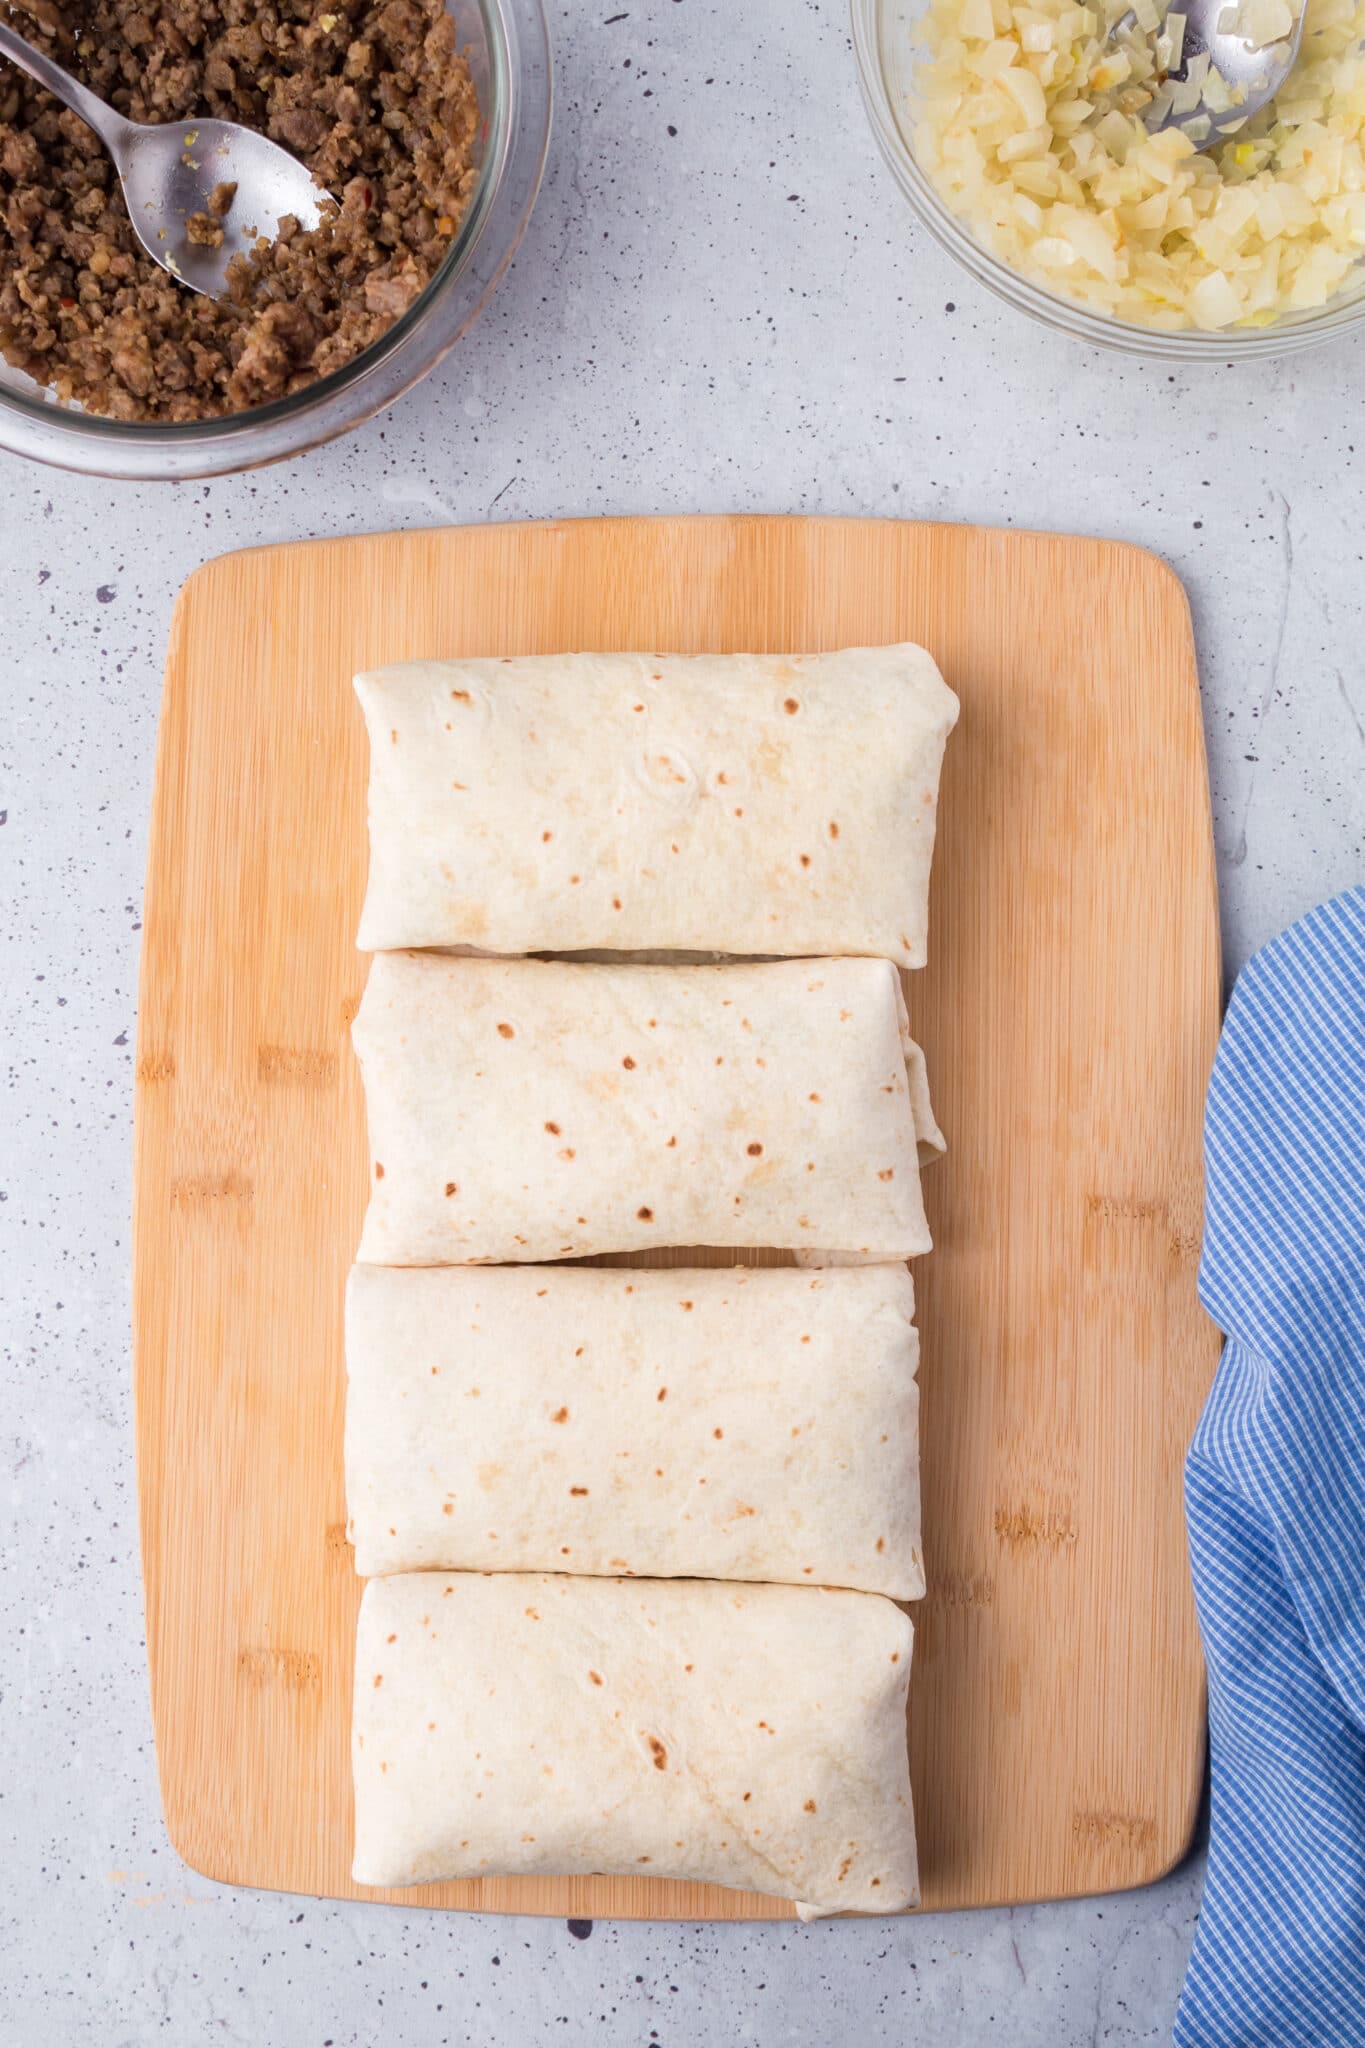 The folded burritos on the cutting board.